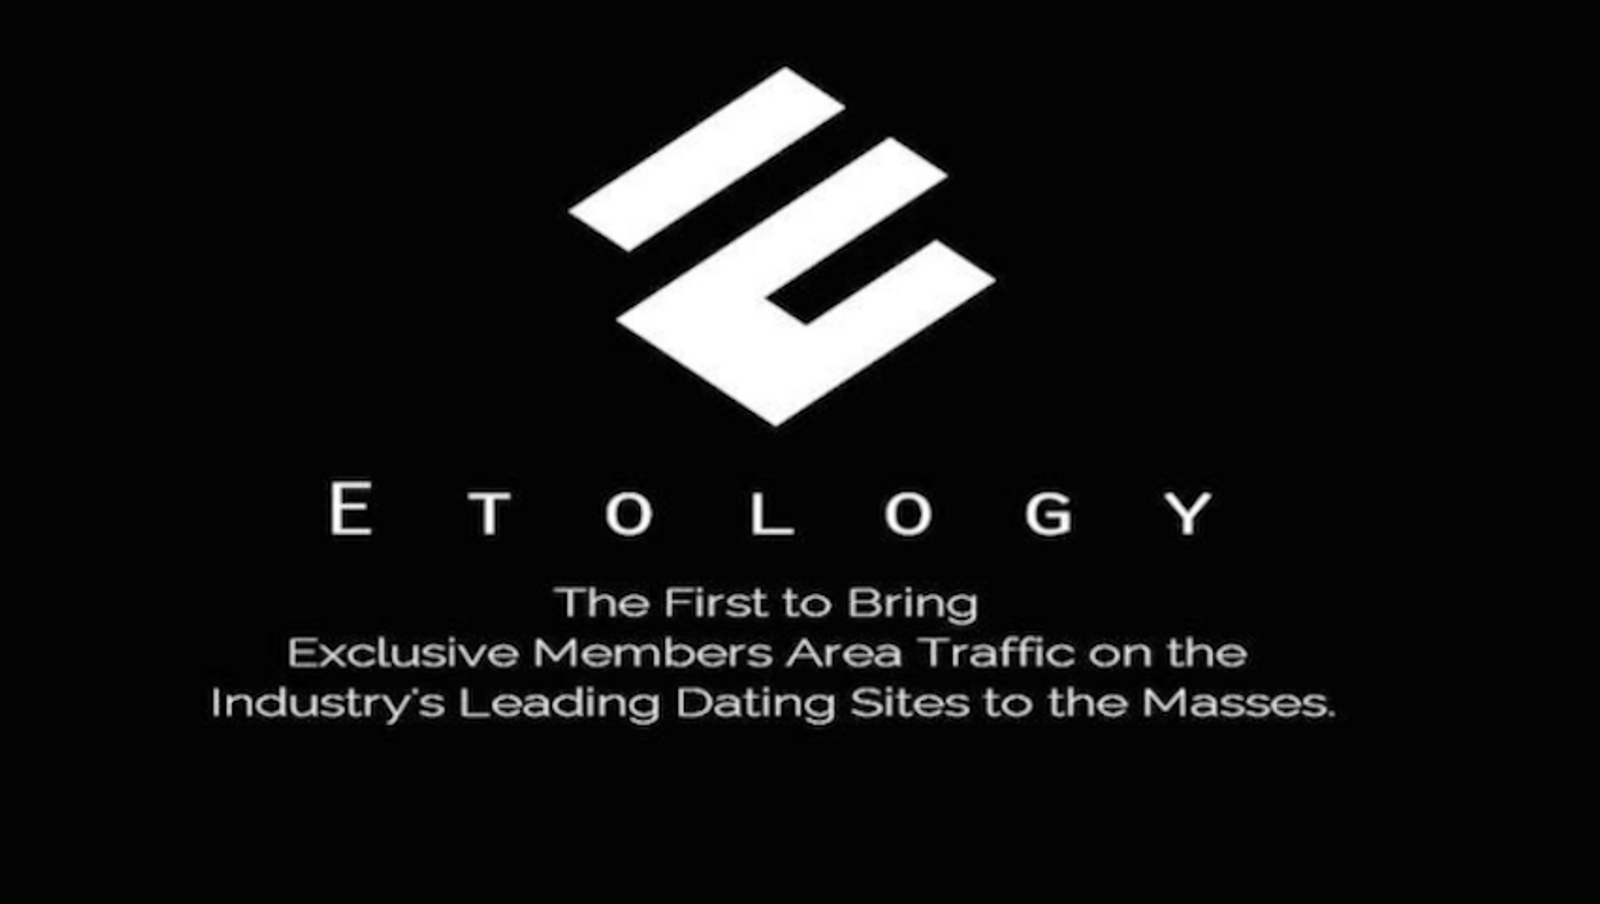 Etology Now Provides Fully Customizable Self-Serve Ad Network